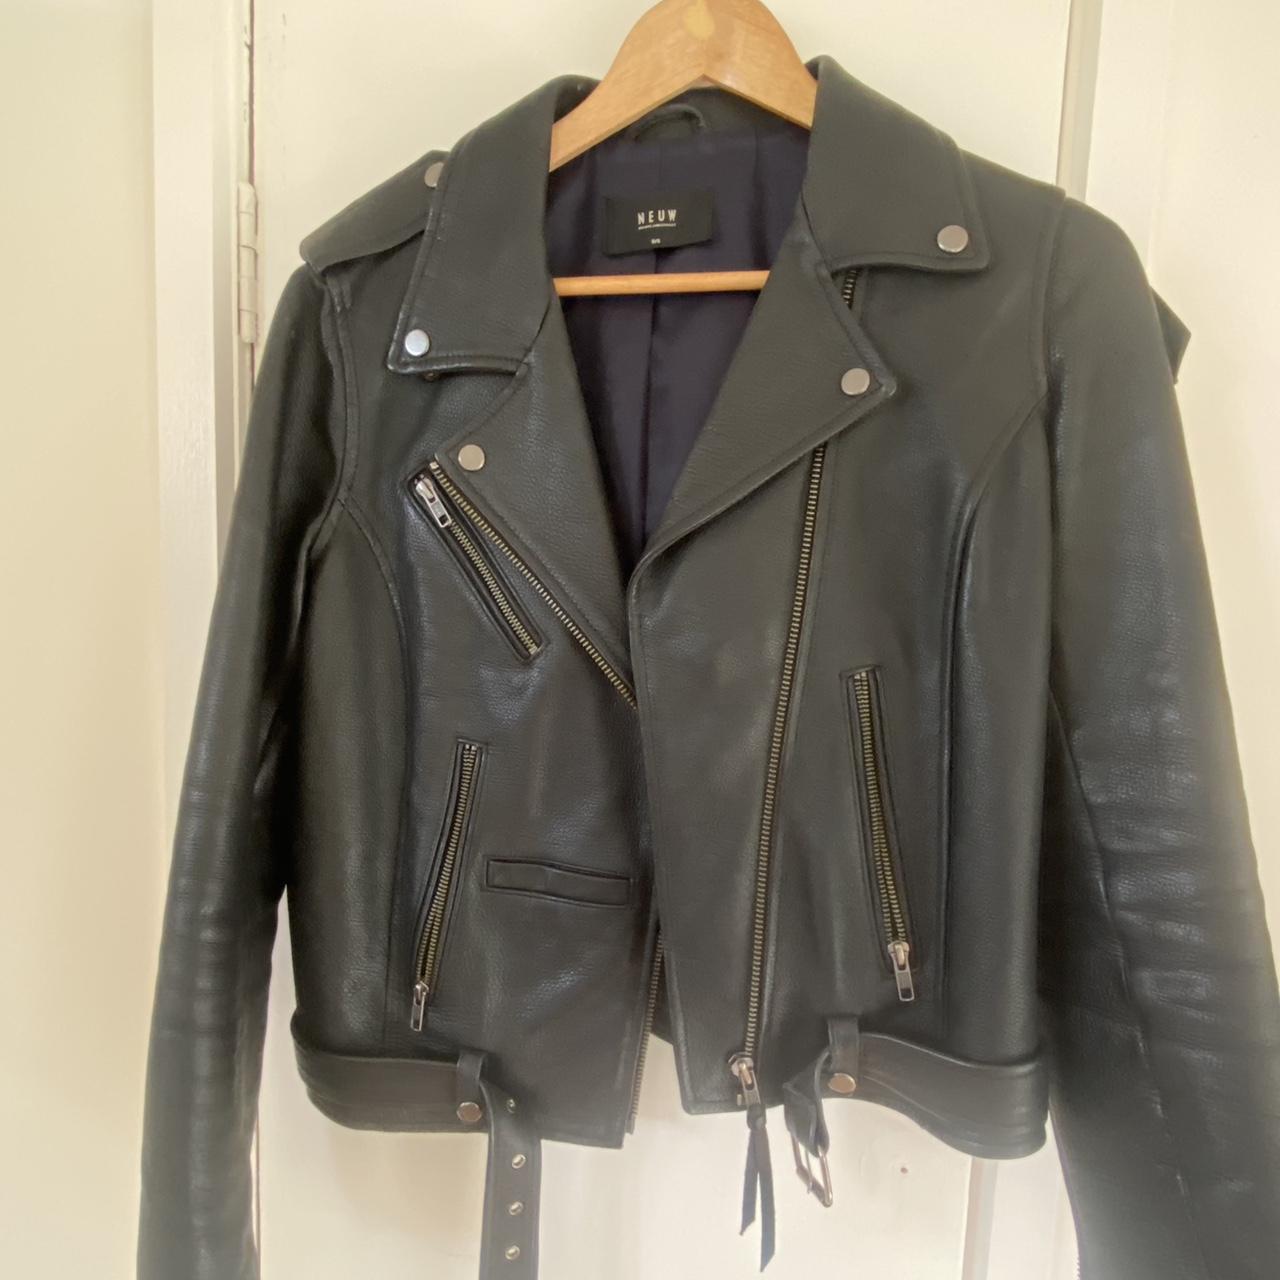 NEUW genuine leather jacket #neuw #rollas - Depop